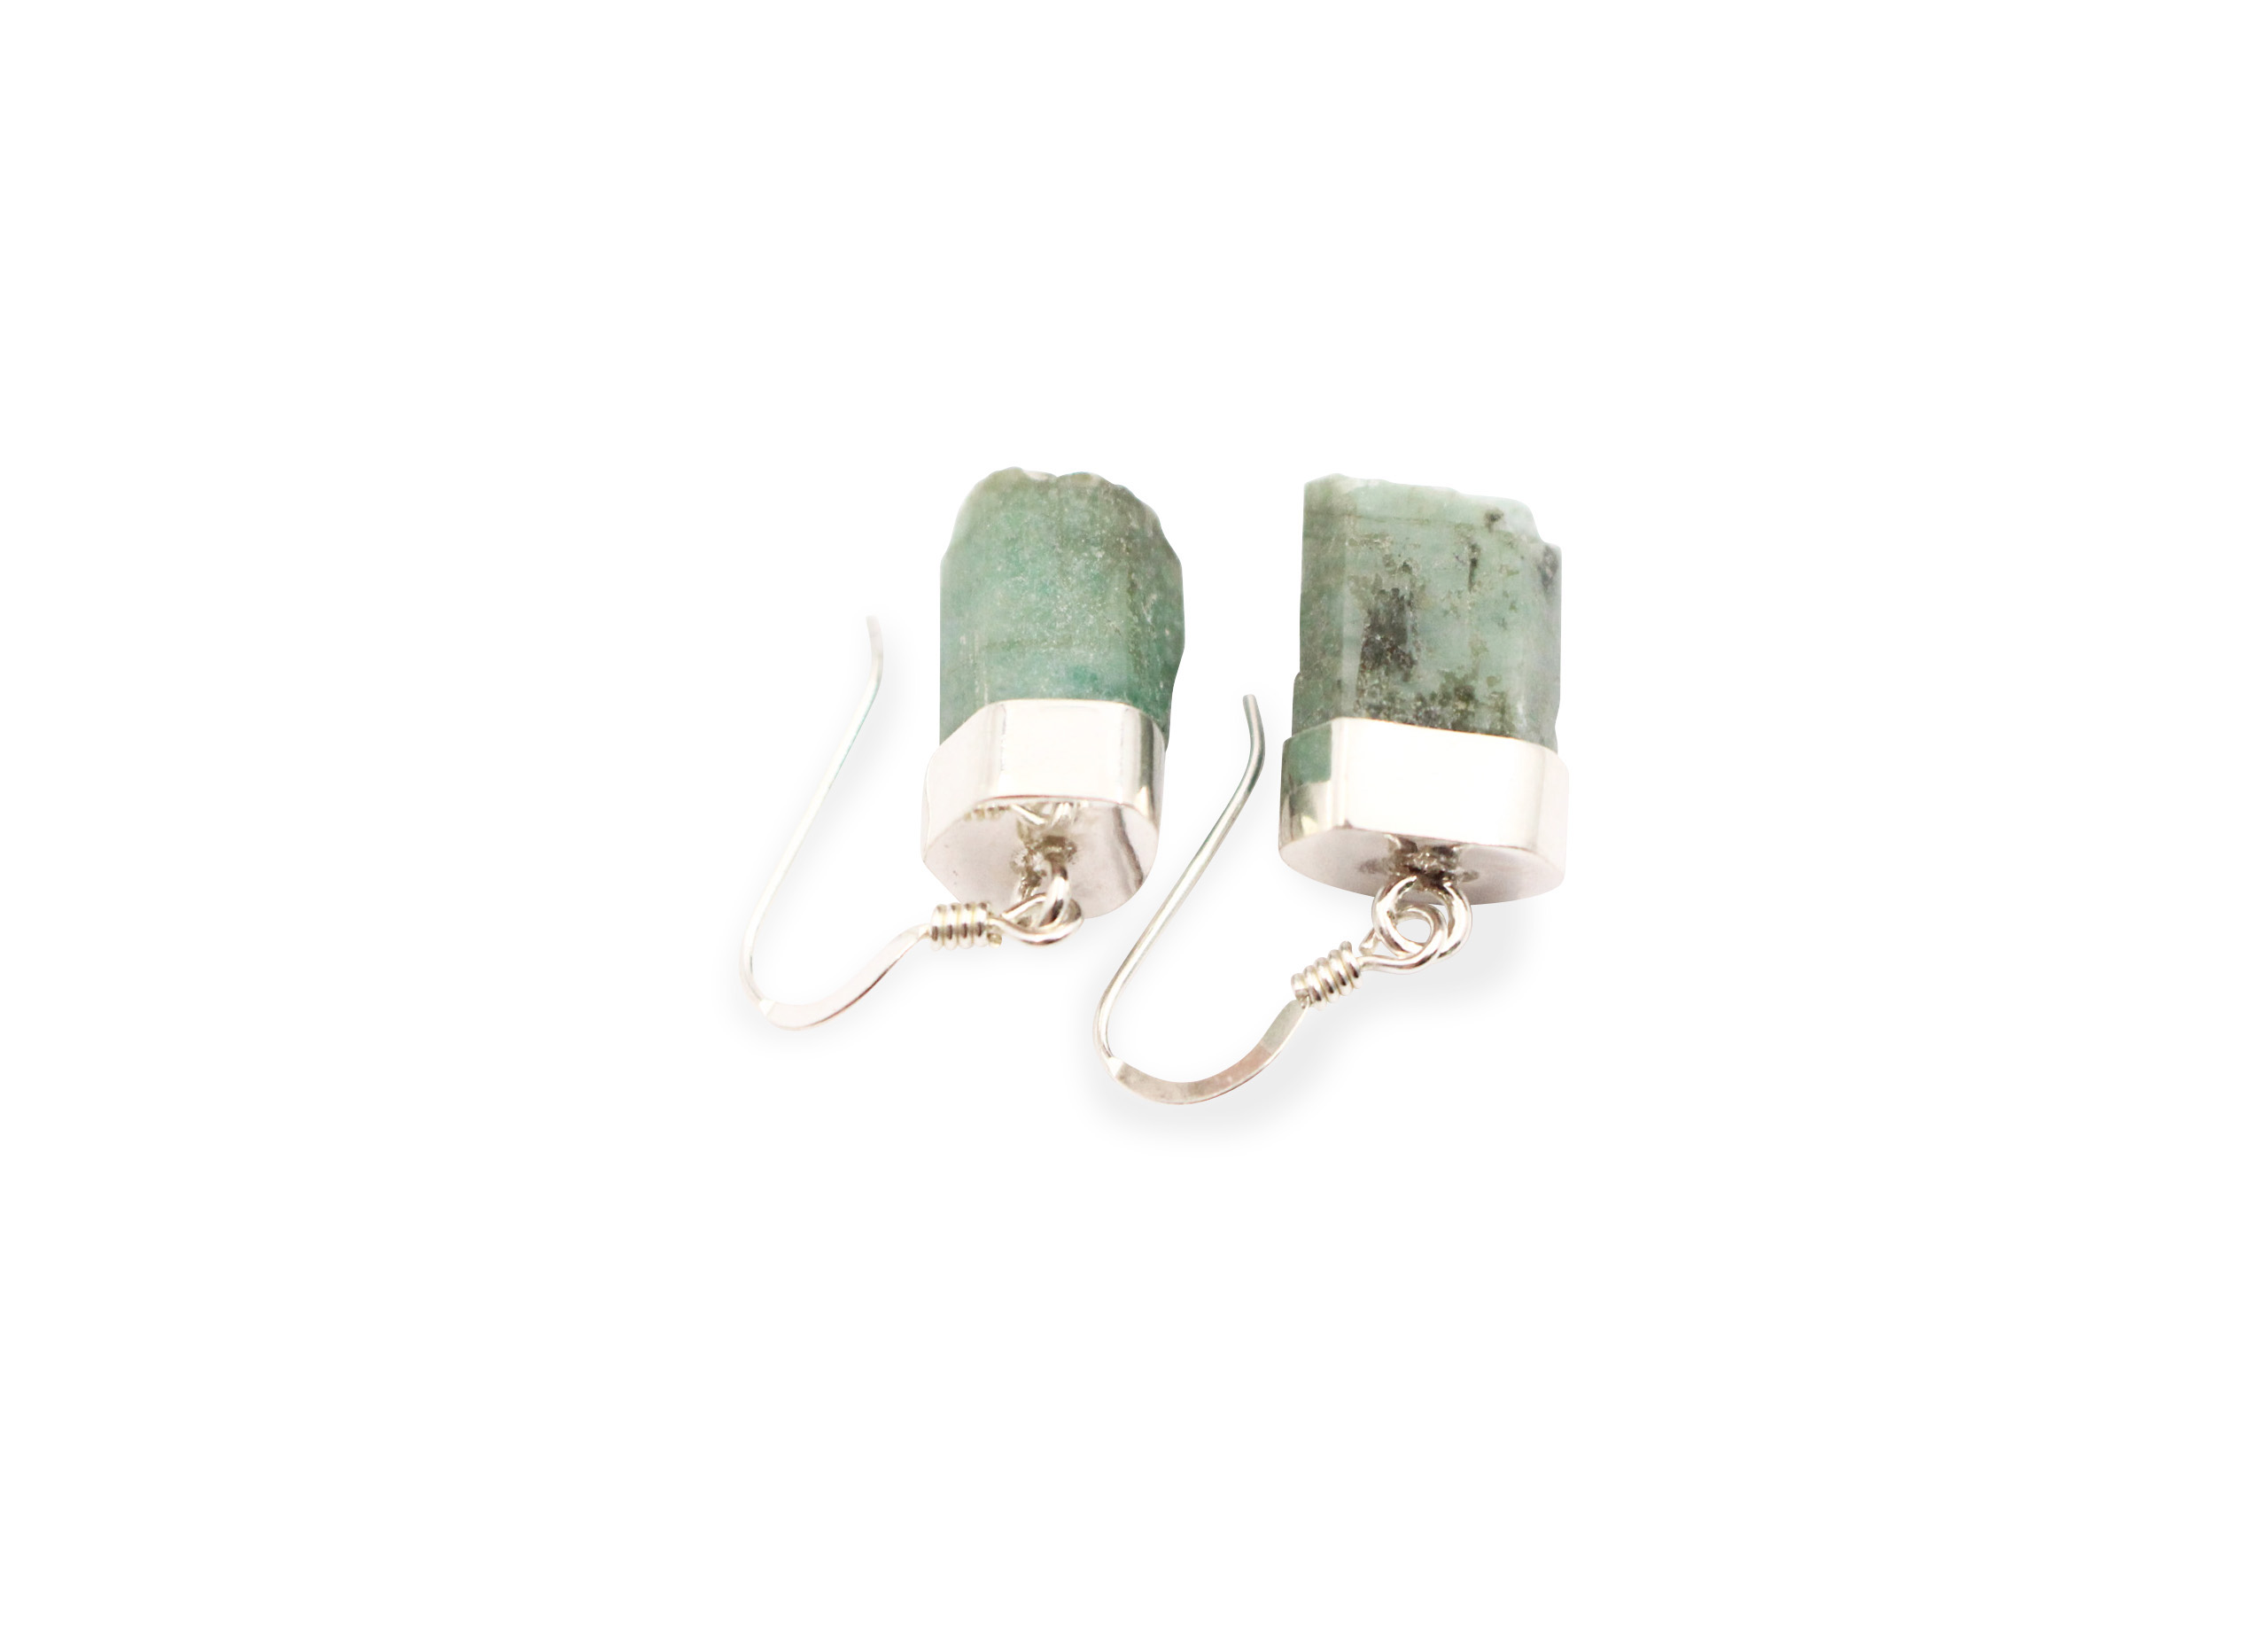 Emerald Rough Sterling earrings Sterling Silver-Crystal Dreams